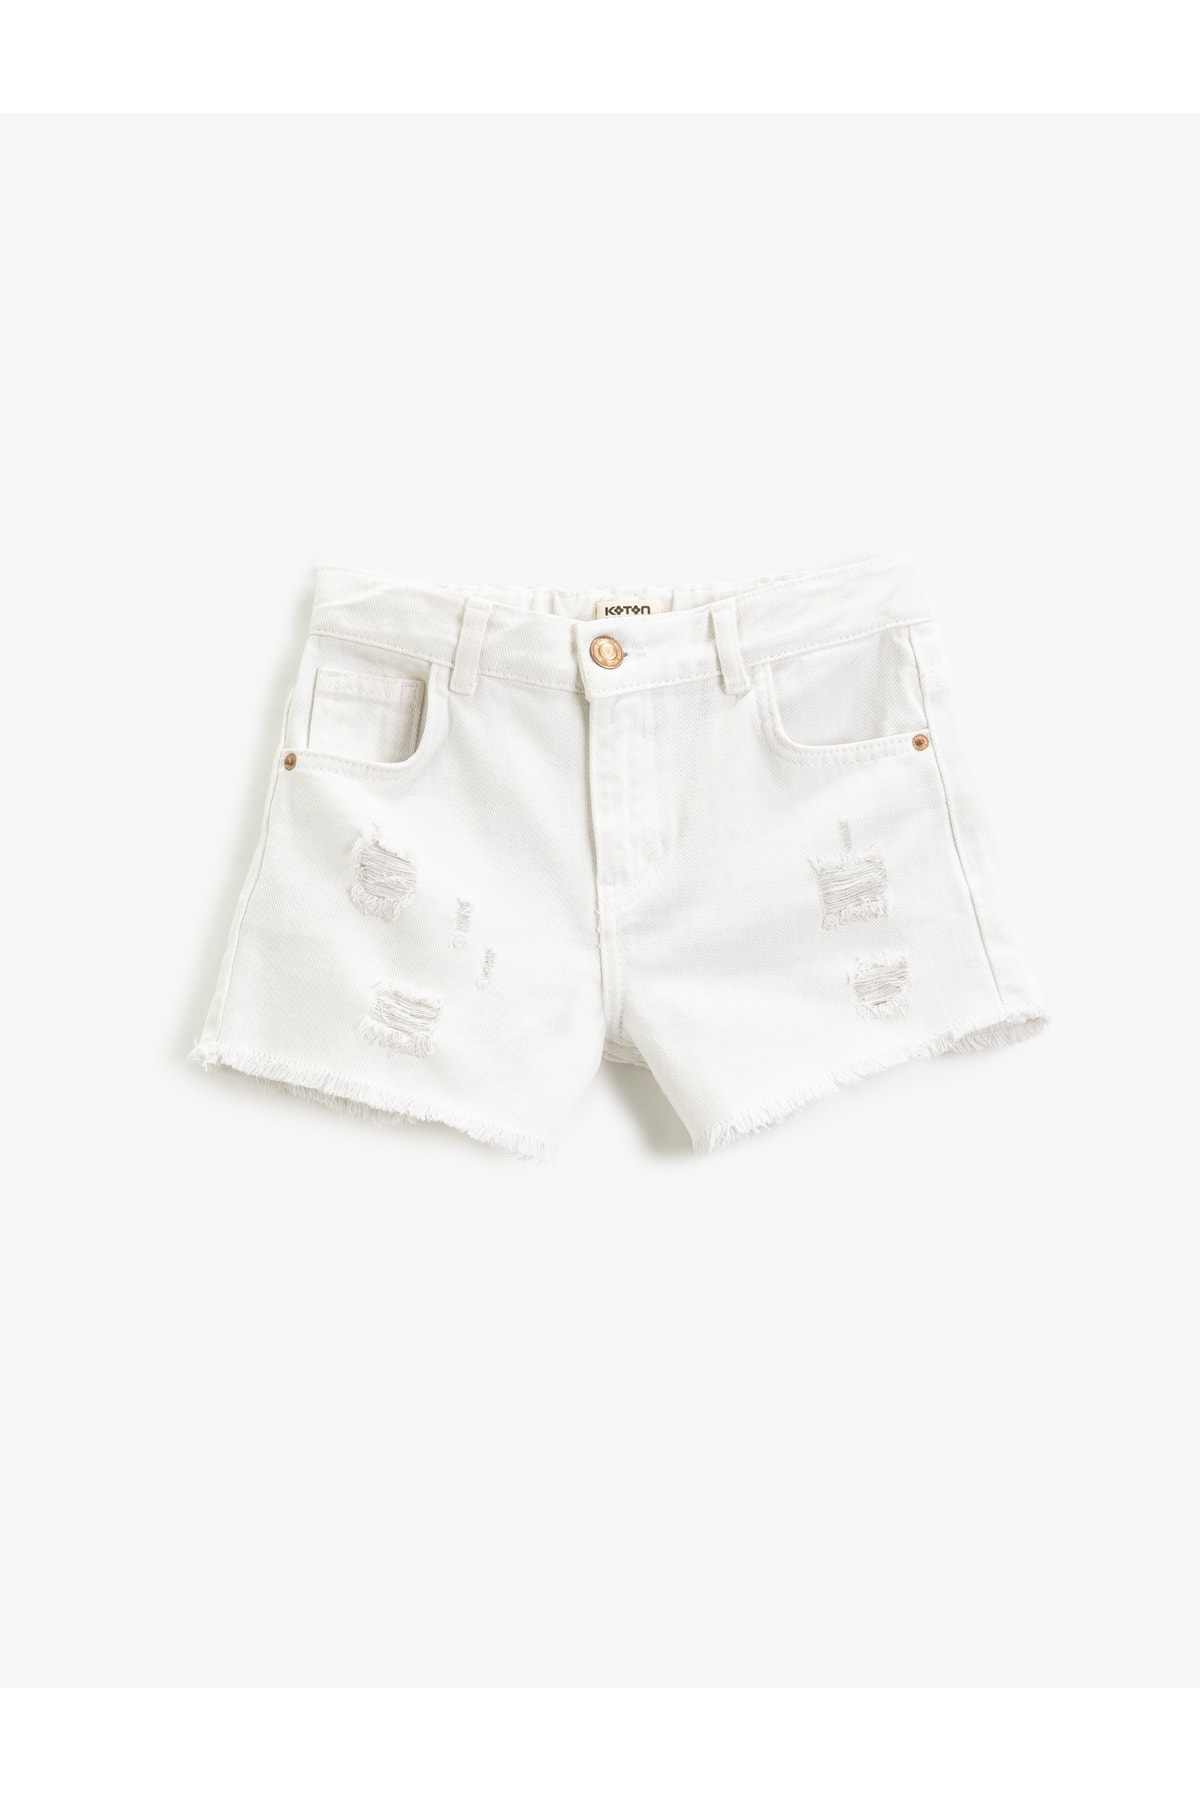 Levně Koton Denim shorts with pockets, frayed details, cotton tassels around the edges, and an adjustable elasticated waist.